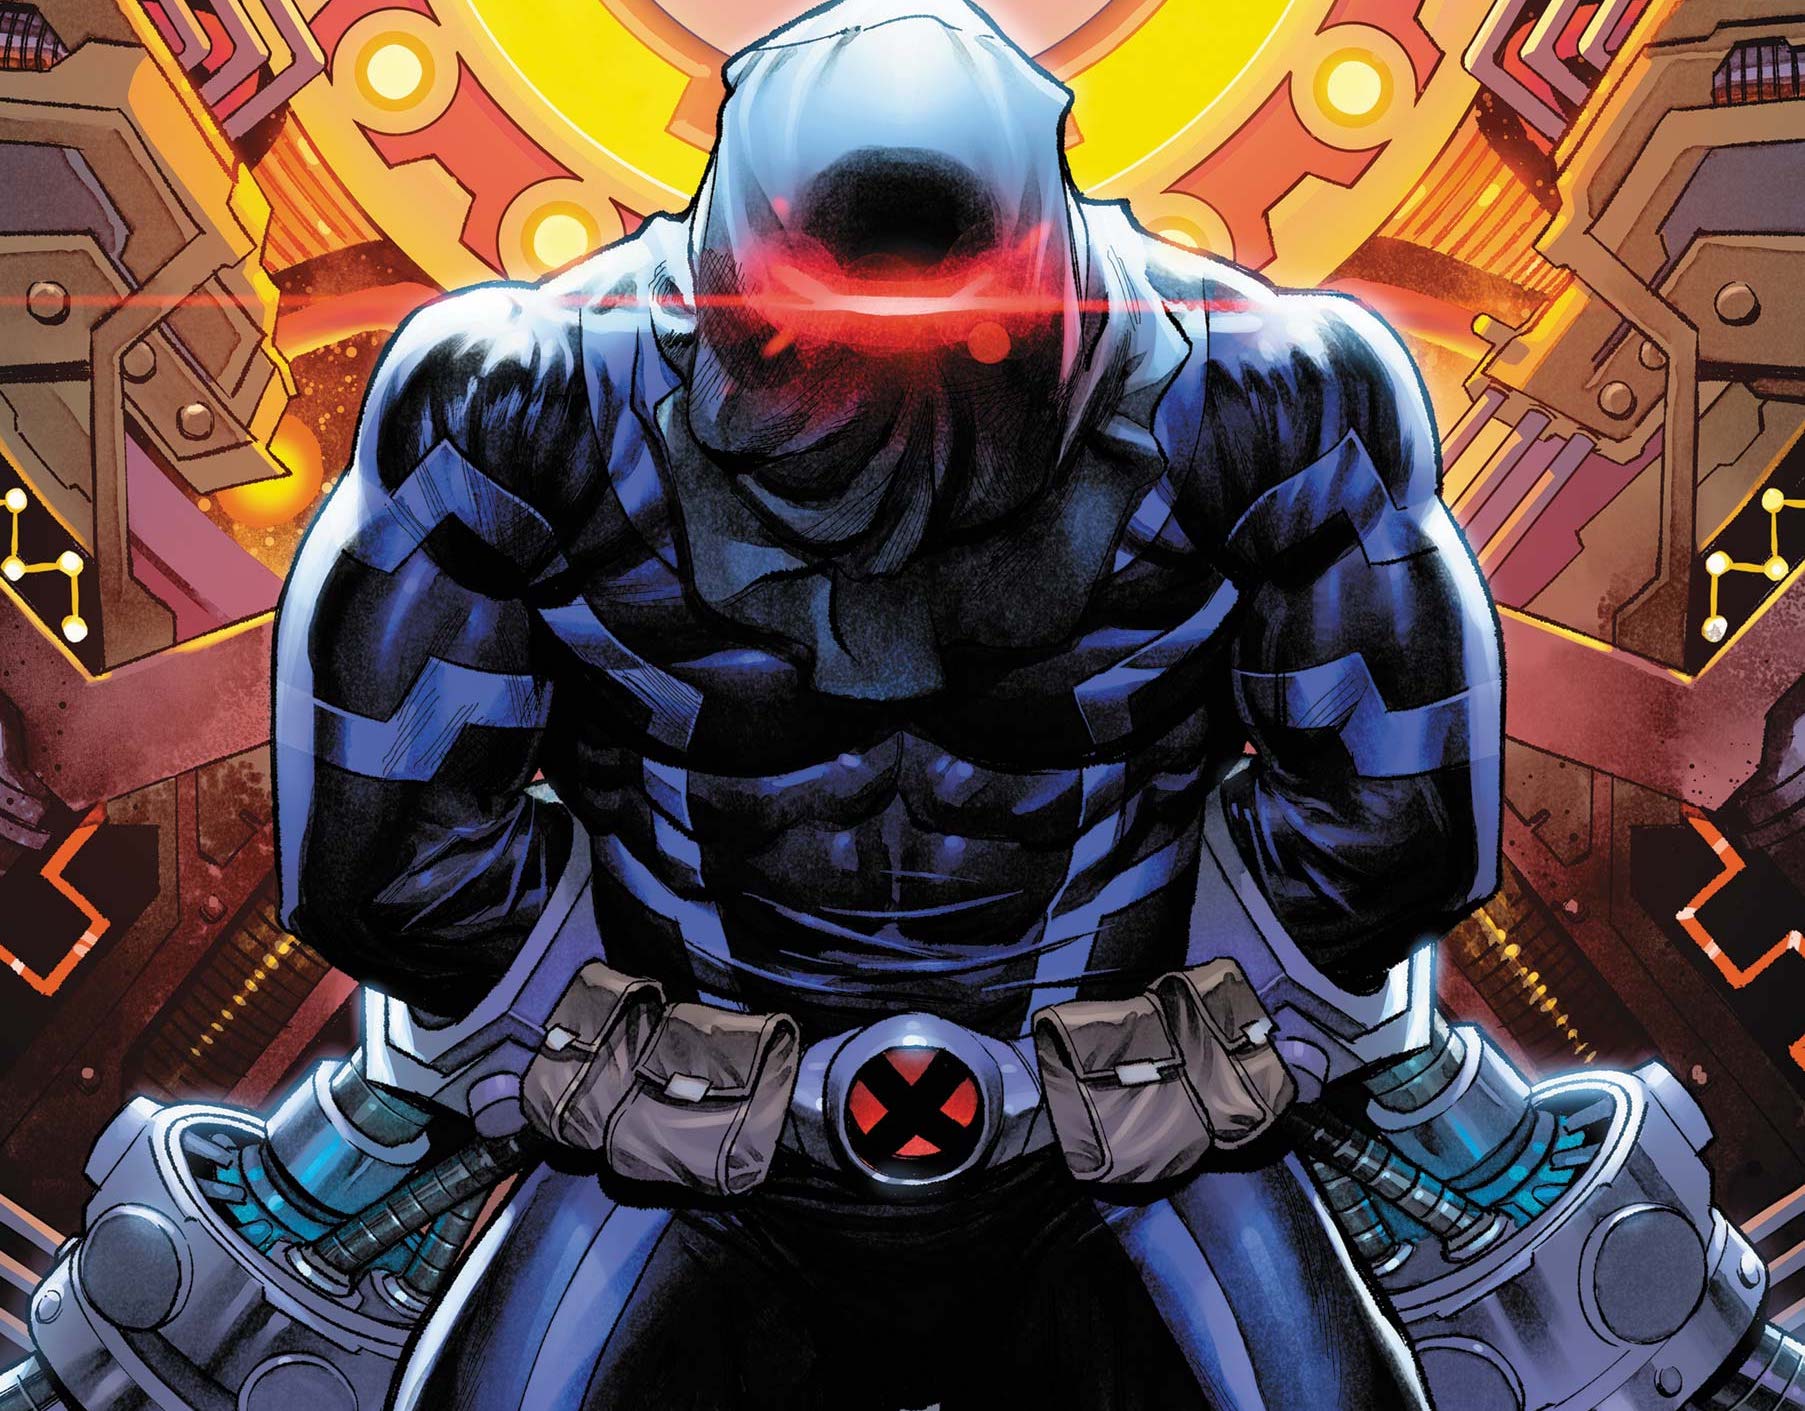 X-Men #14